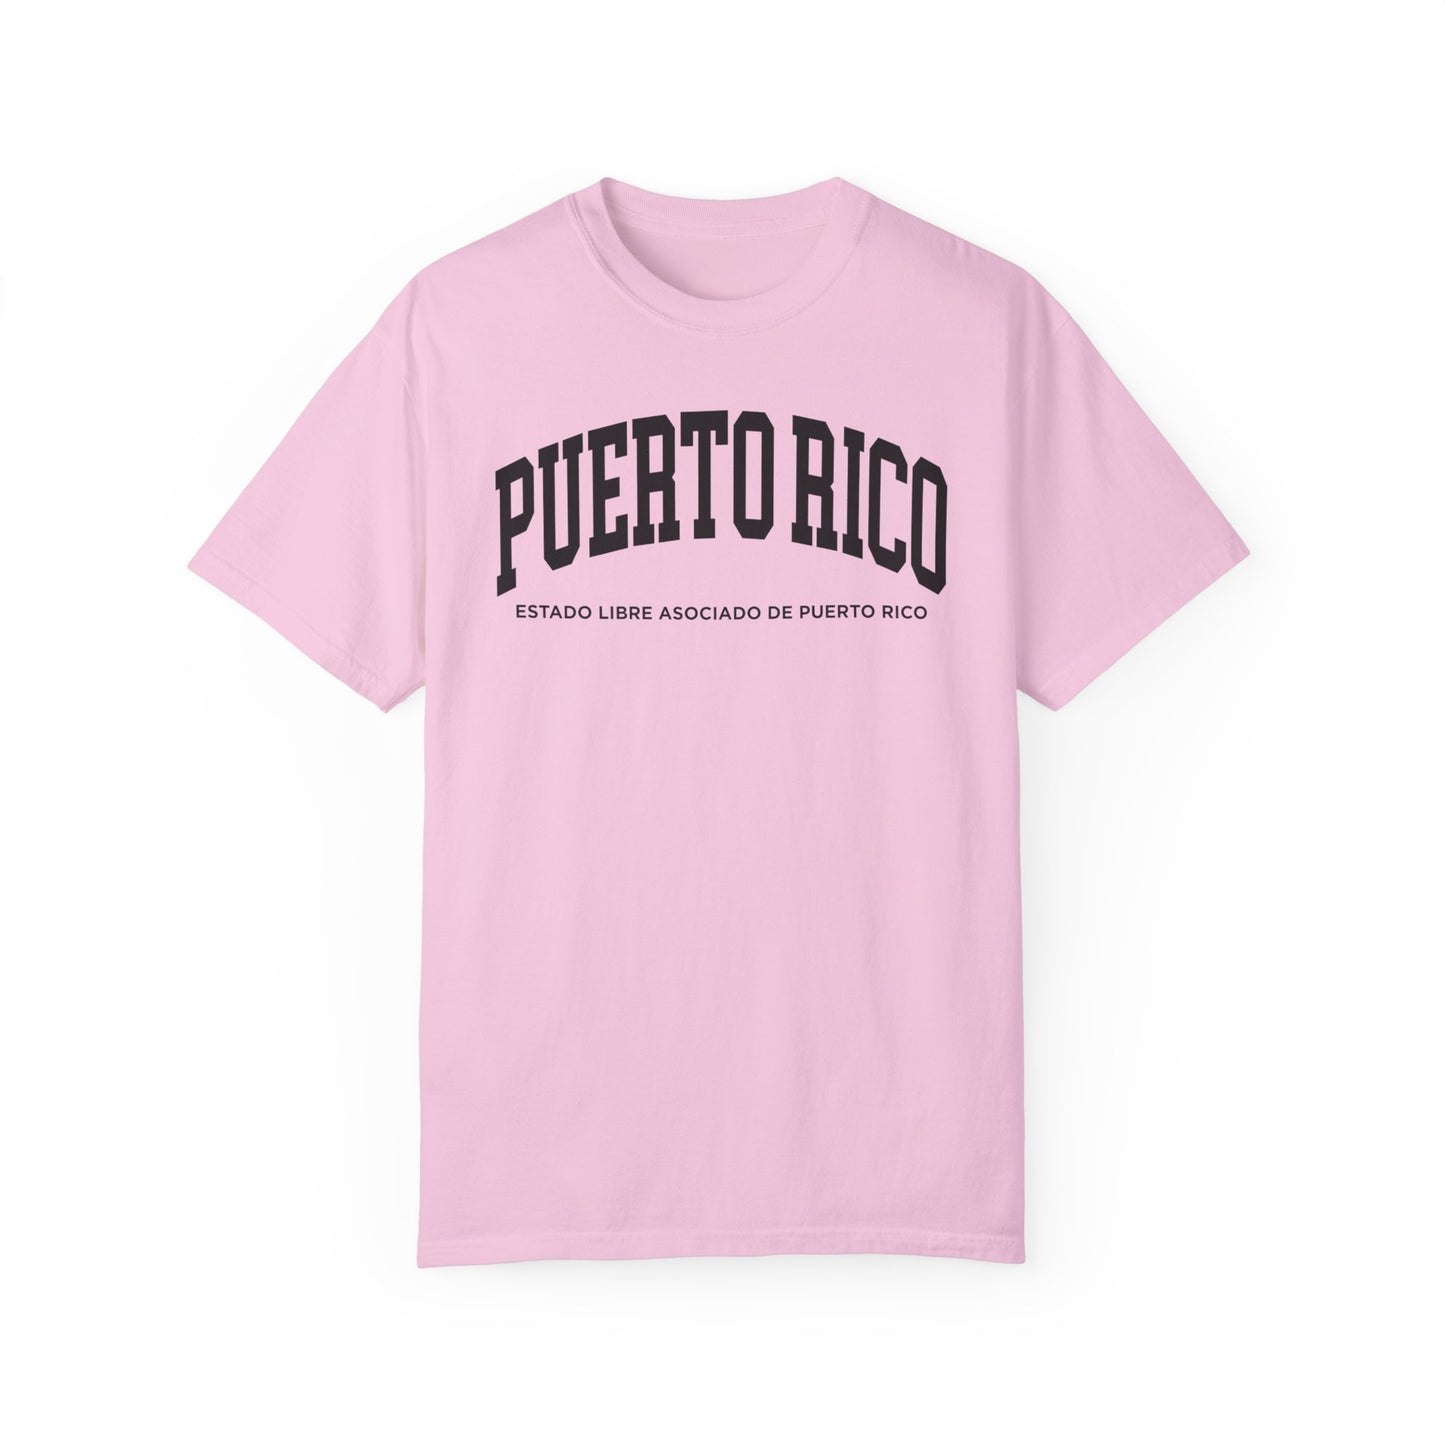 Puerto Rico Comfort Colors® Tee